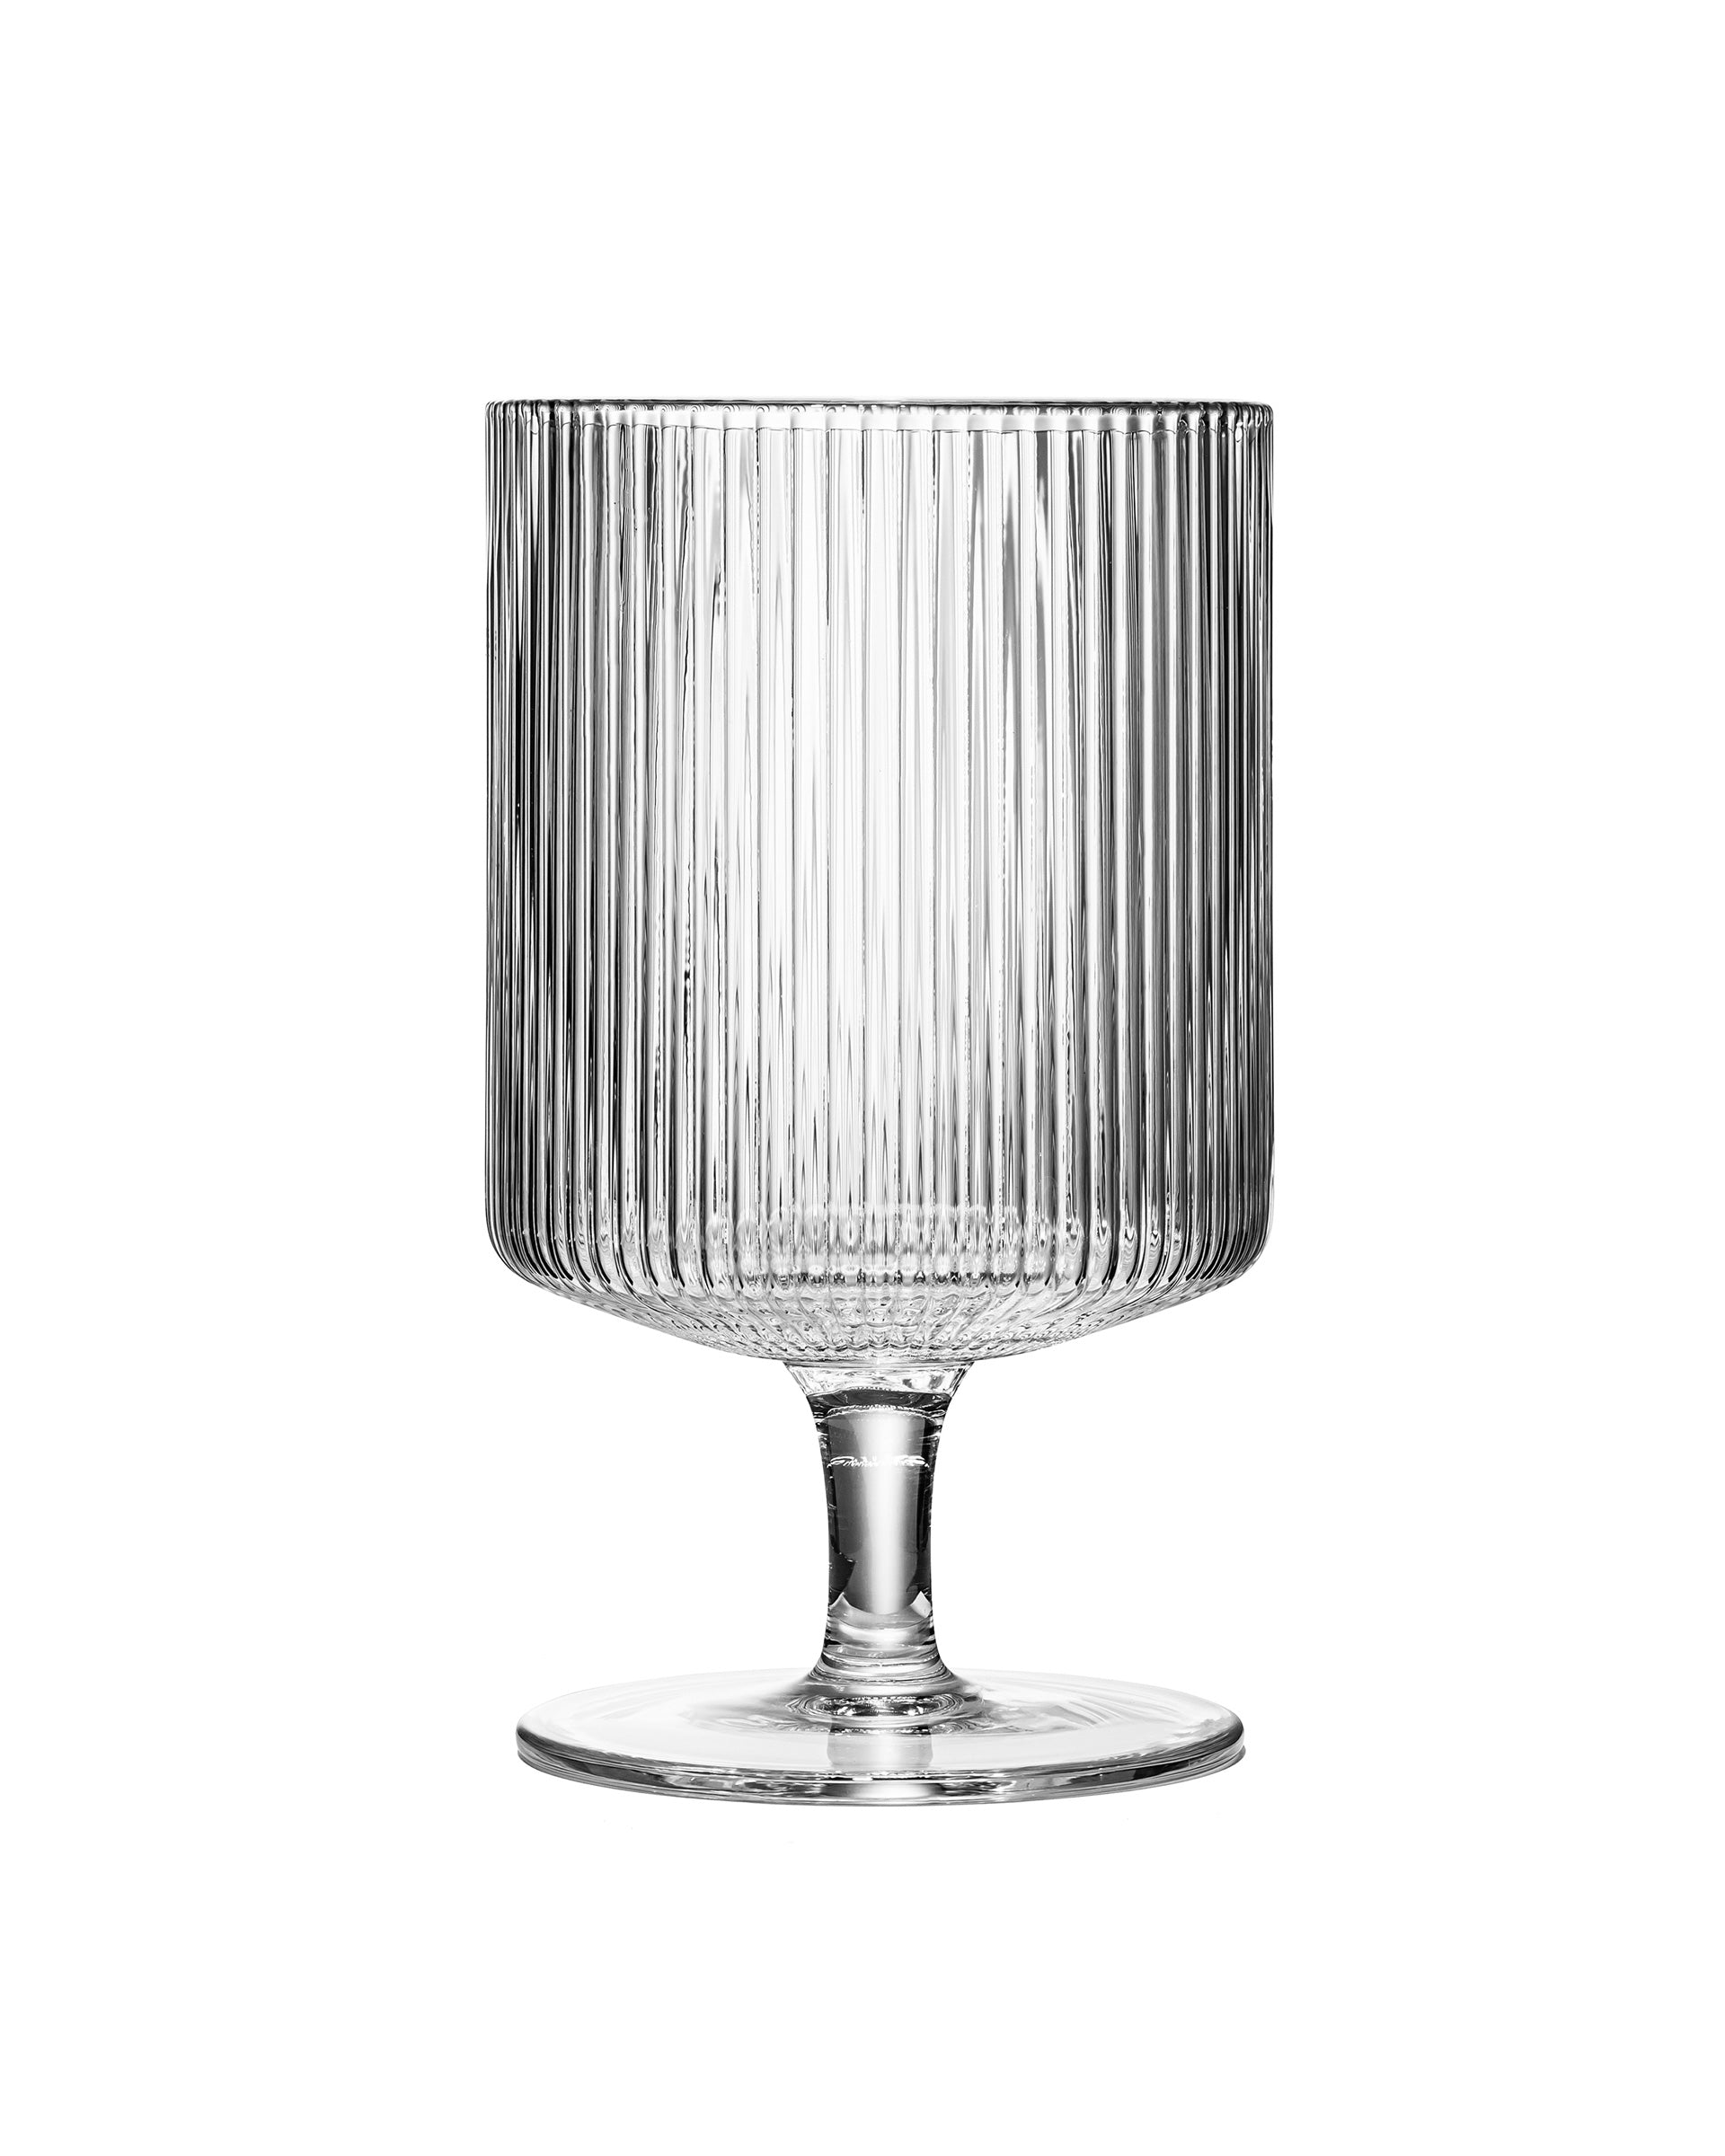 4oz Ribbed Martini Glasses Set of 4, Stripe Design Art Deco Crystal  Cocktail Coupe Glasses, Vintage Coupe Glasses Crystal Cocktail Glasses with  Stem